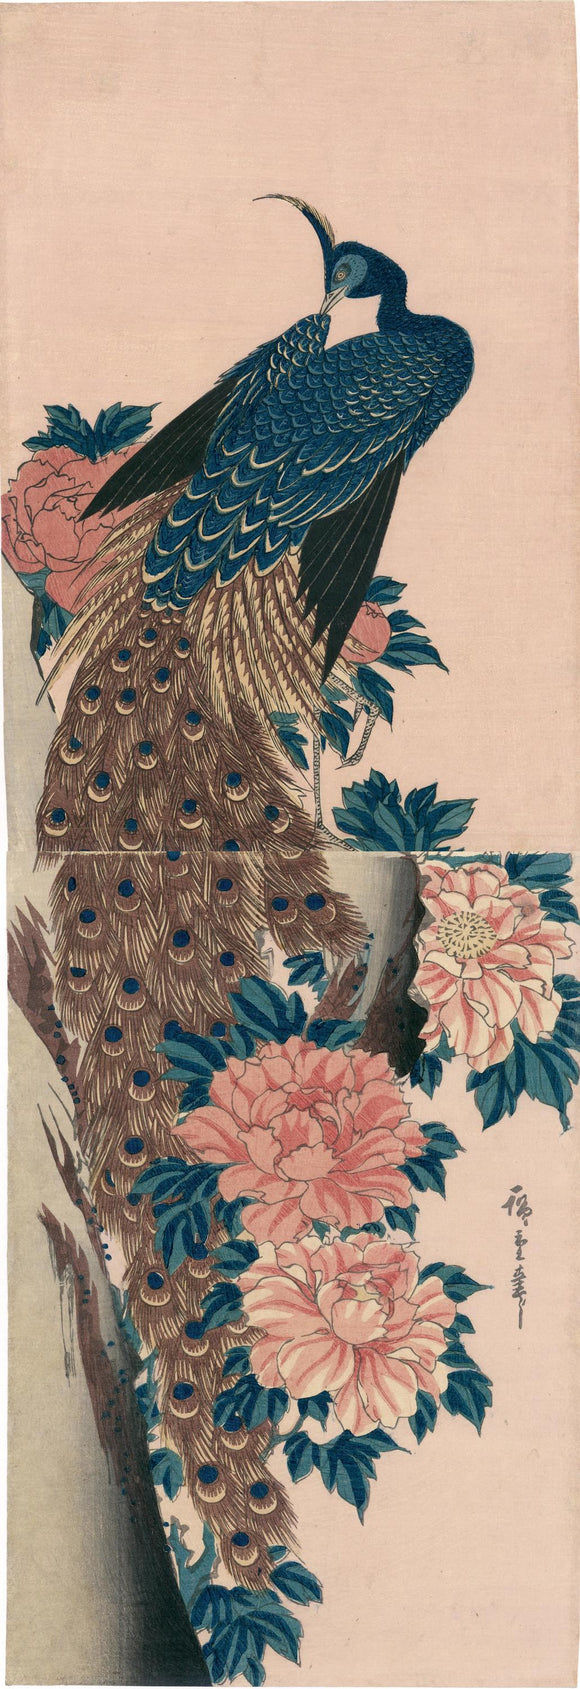 Hiroshige: Peacock and Peonies